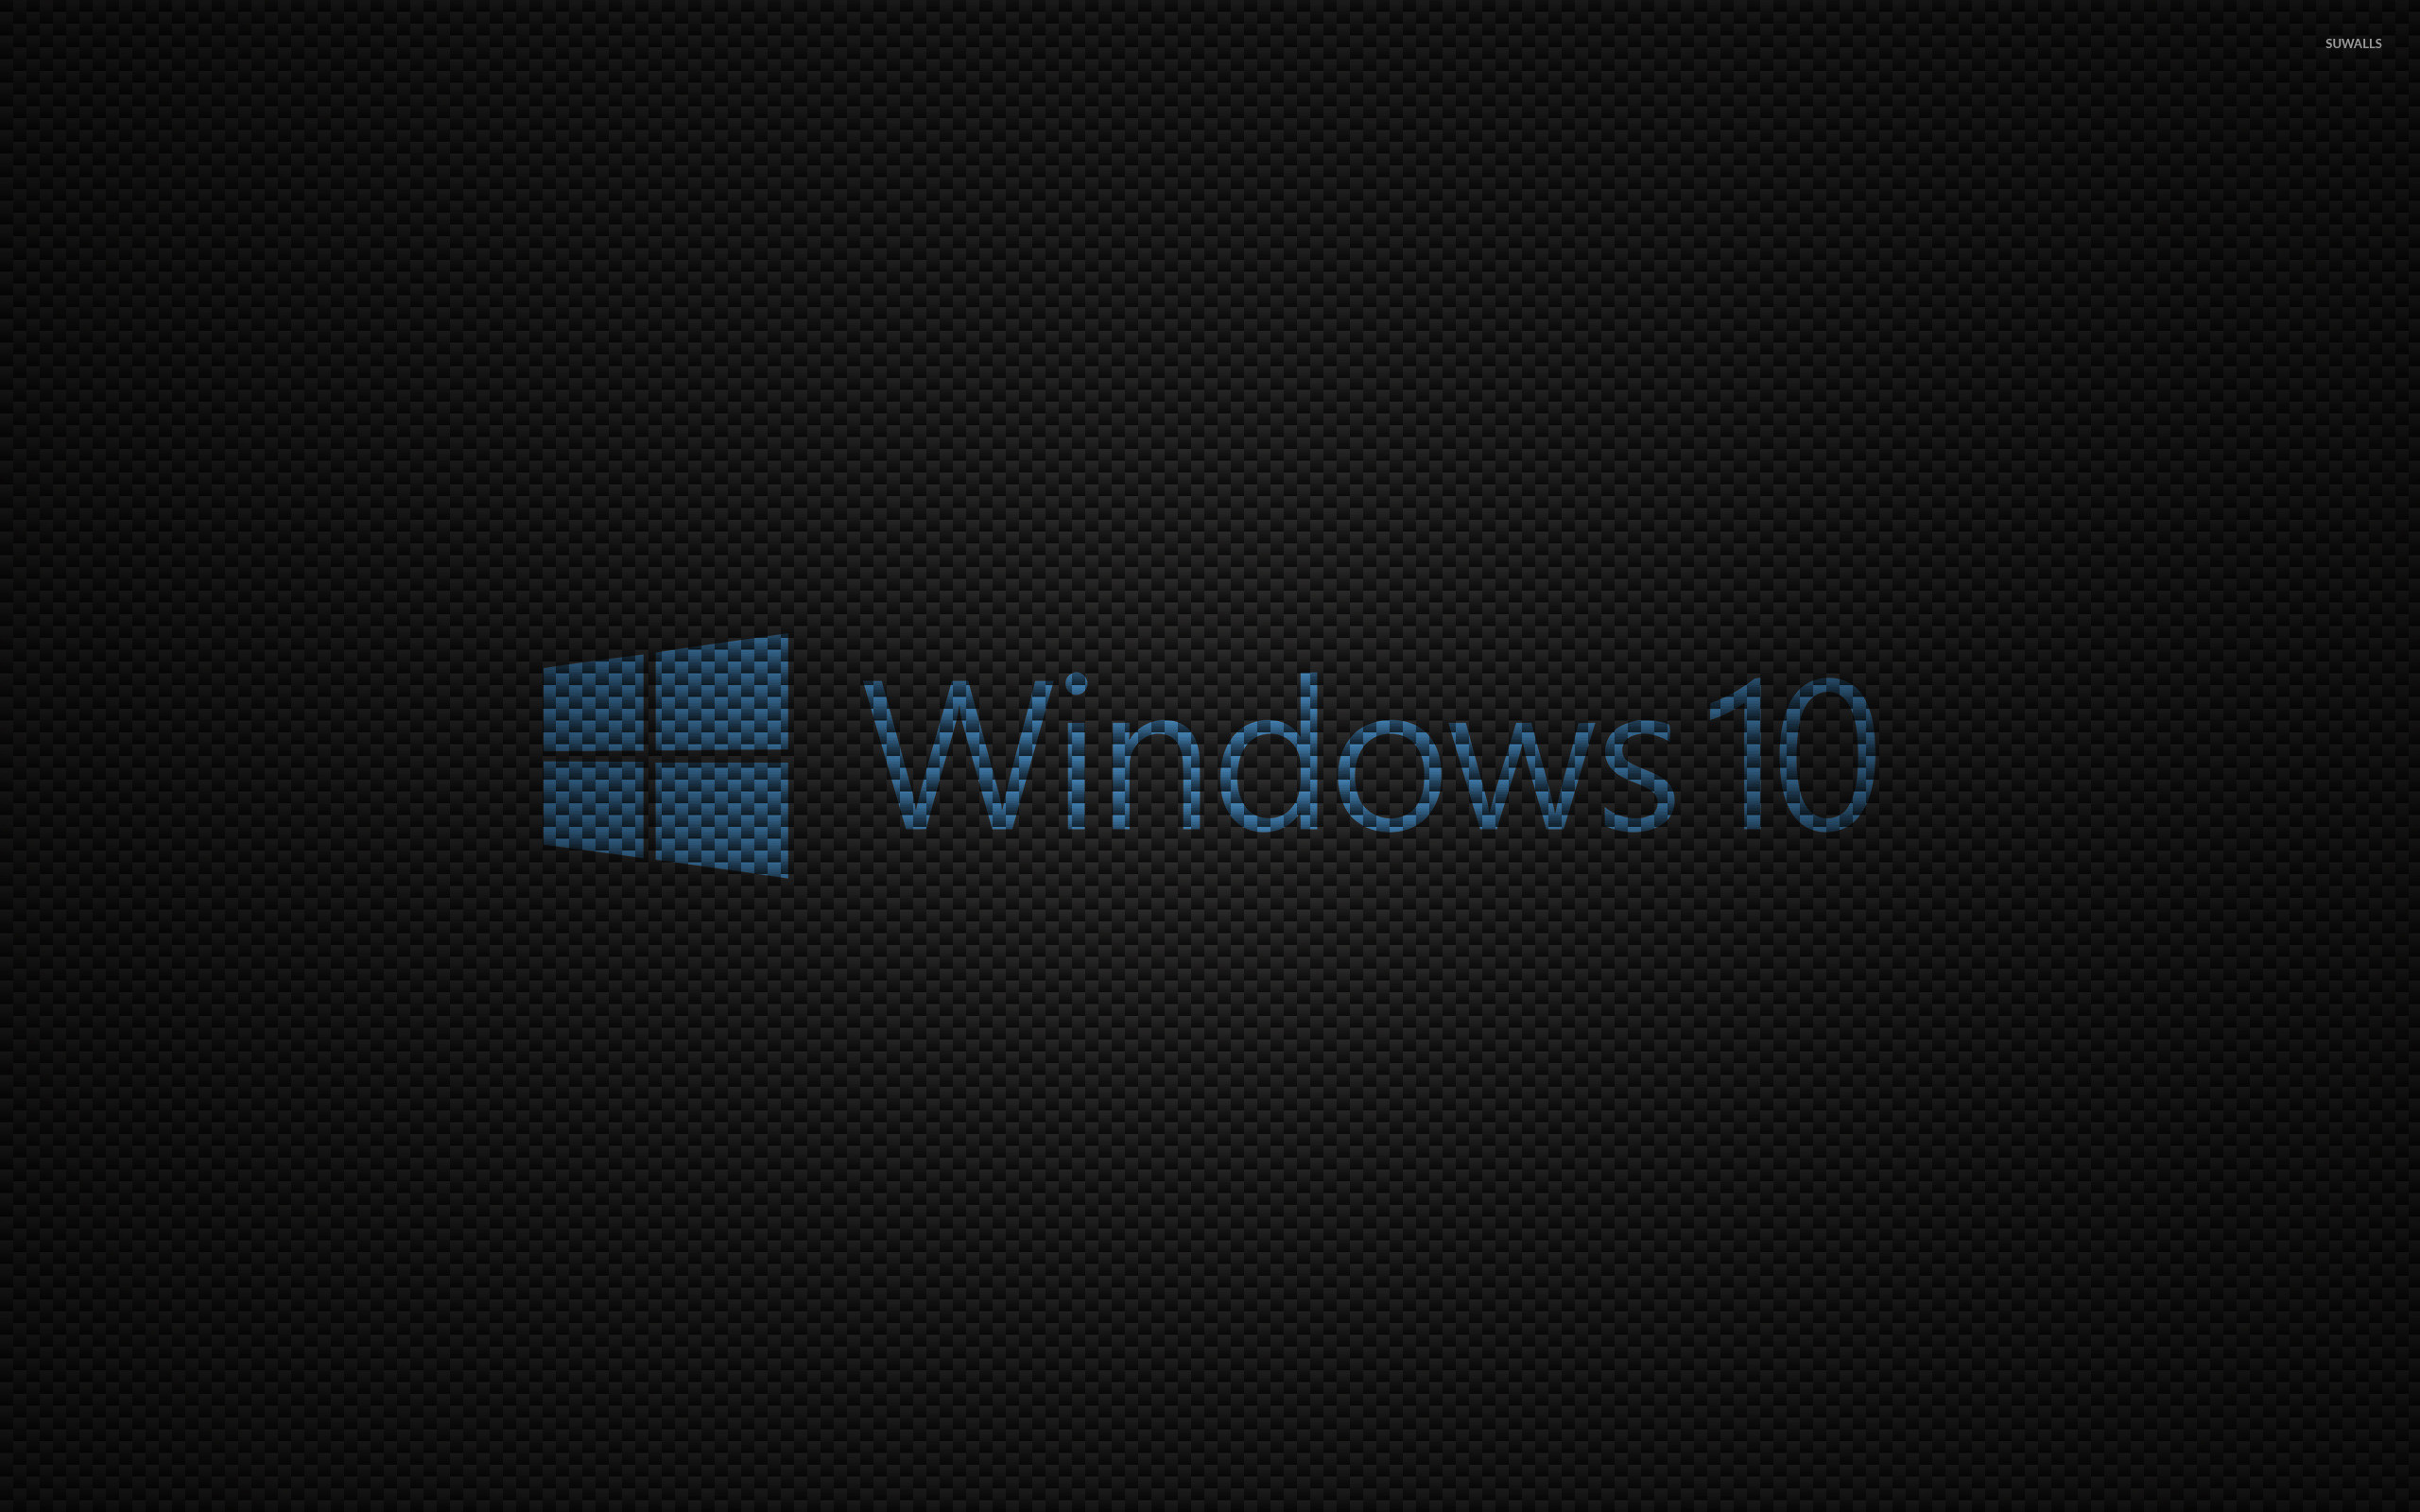 2560x1600 Windows 10 text logo on carbon fiber wallpaper